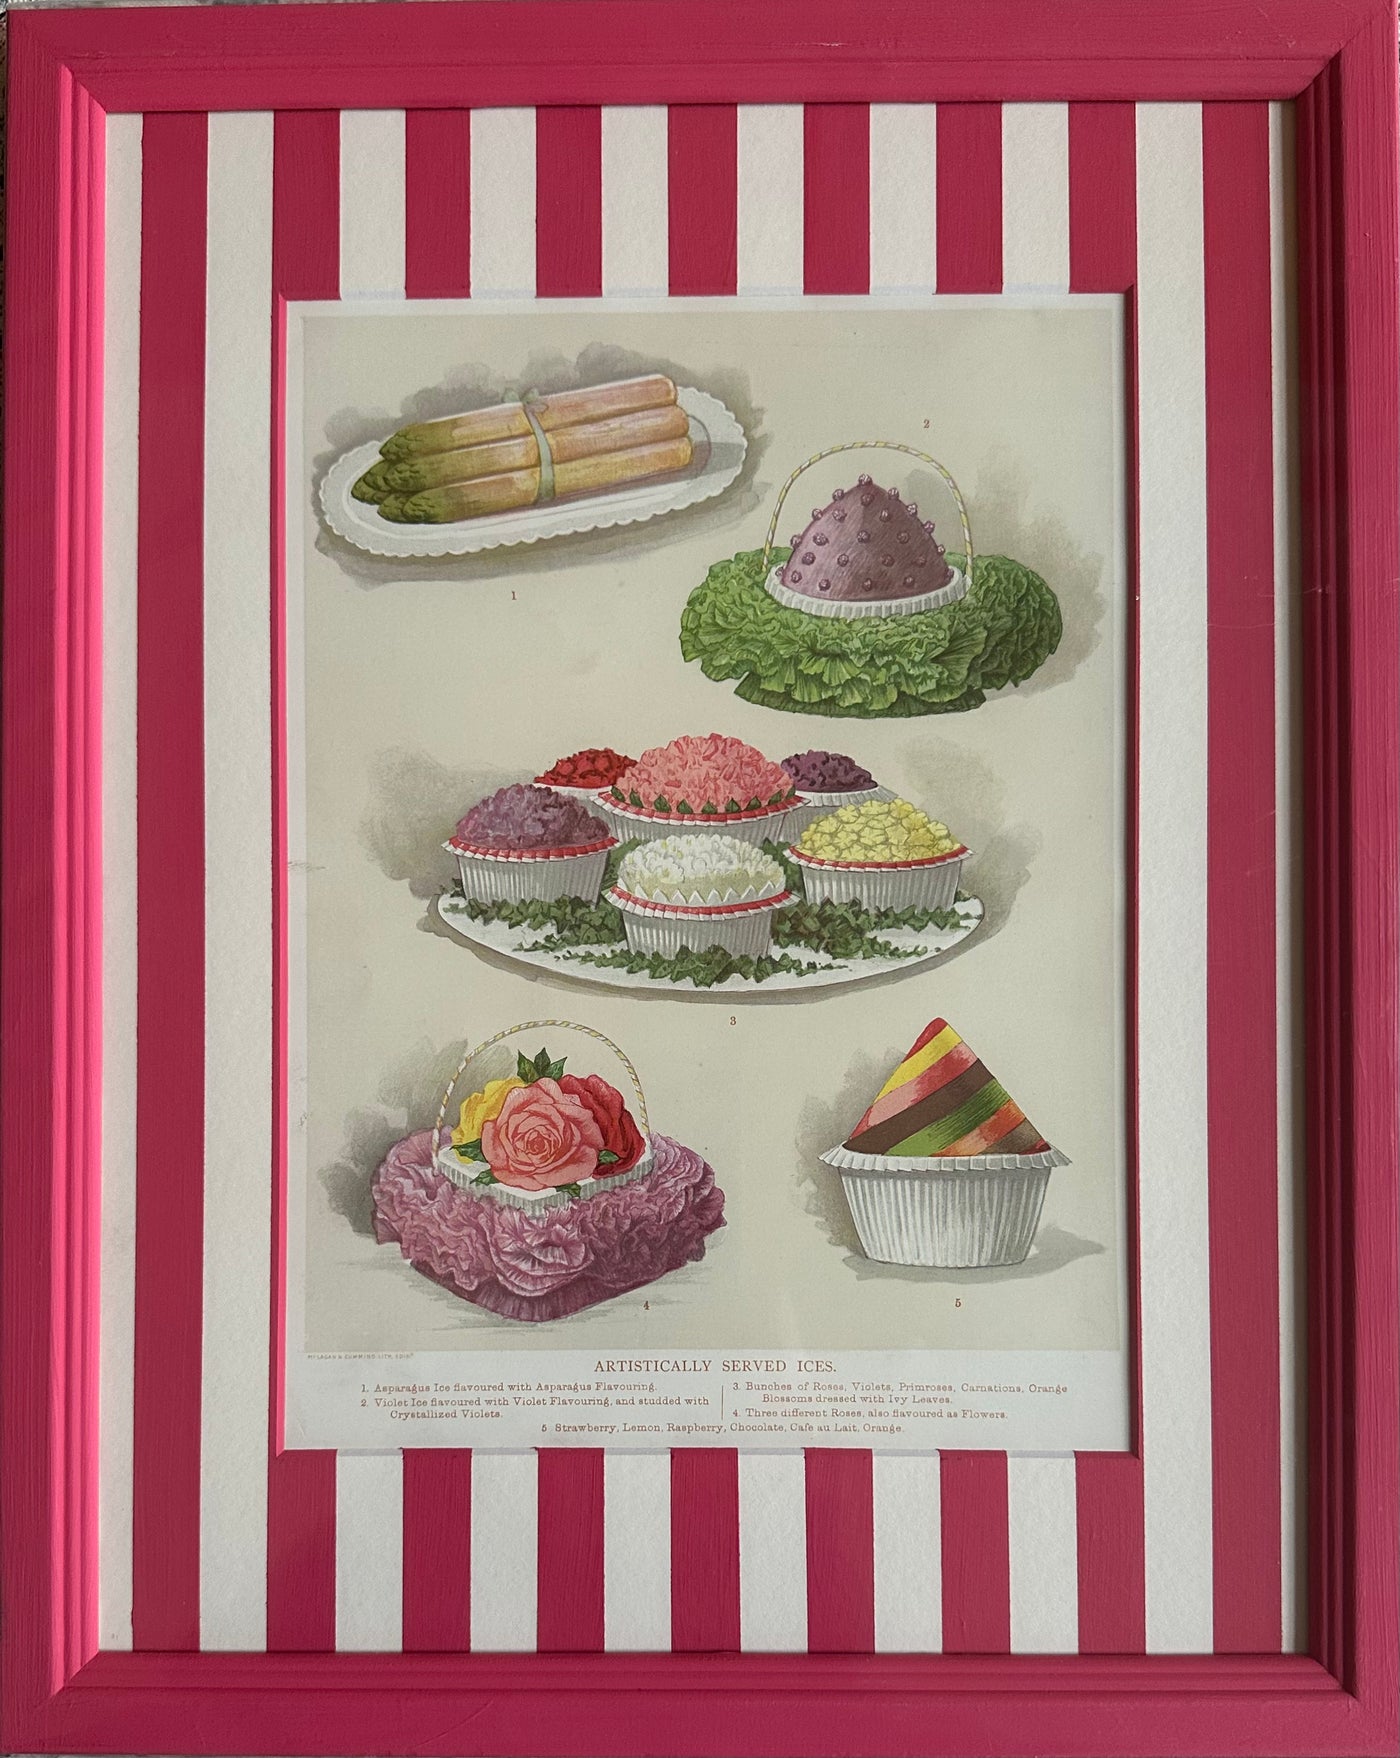 Stripey Gastronomy Prints